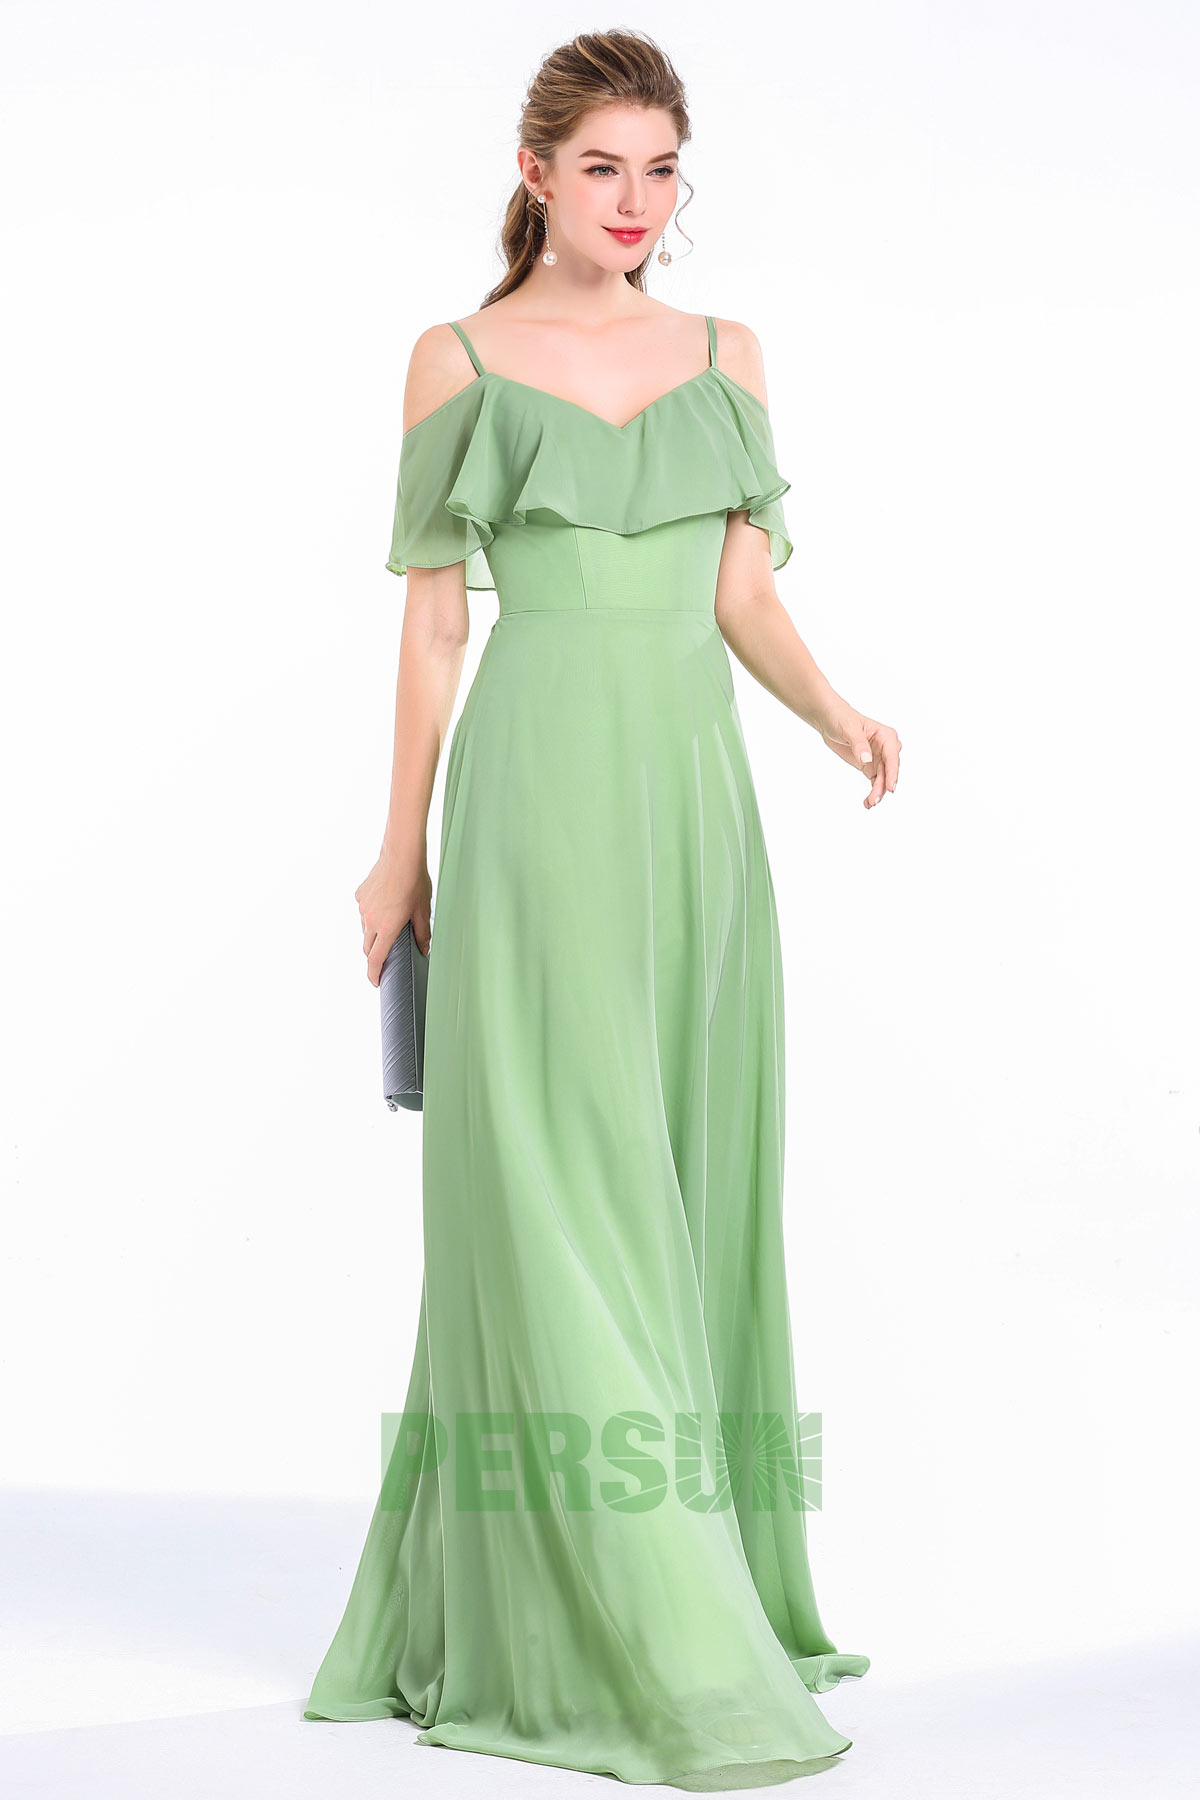 robe-cortege-mariage-greenary-vert-celeri-epaule-denude.jpg?profile=RESIZE_400x